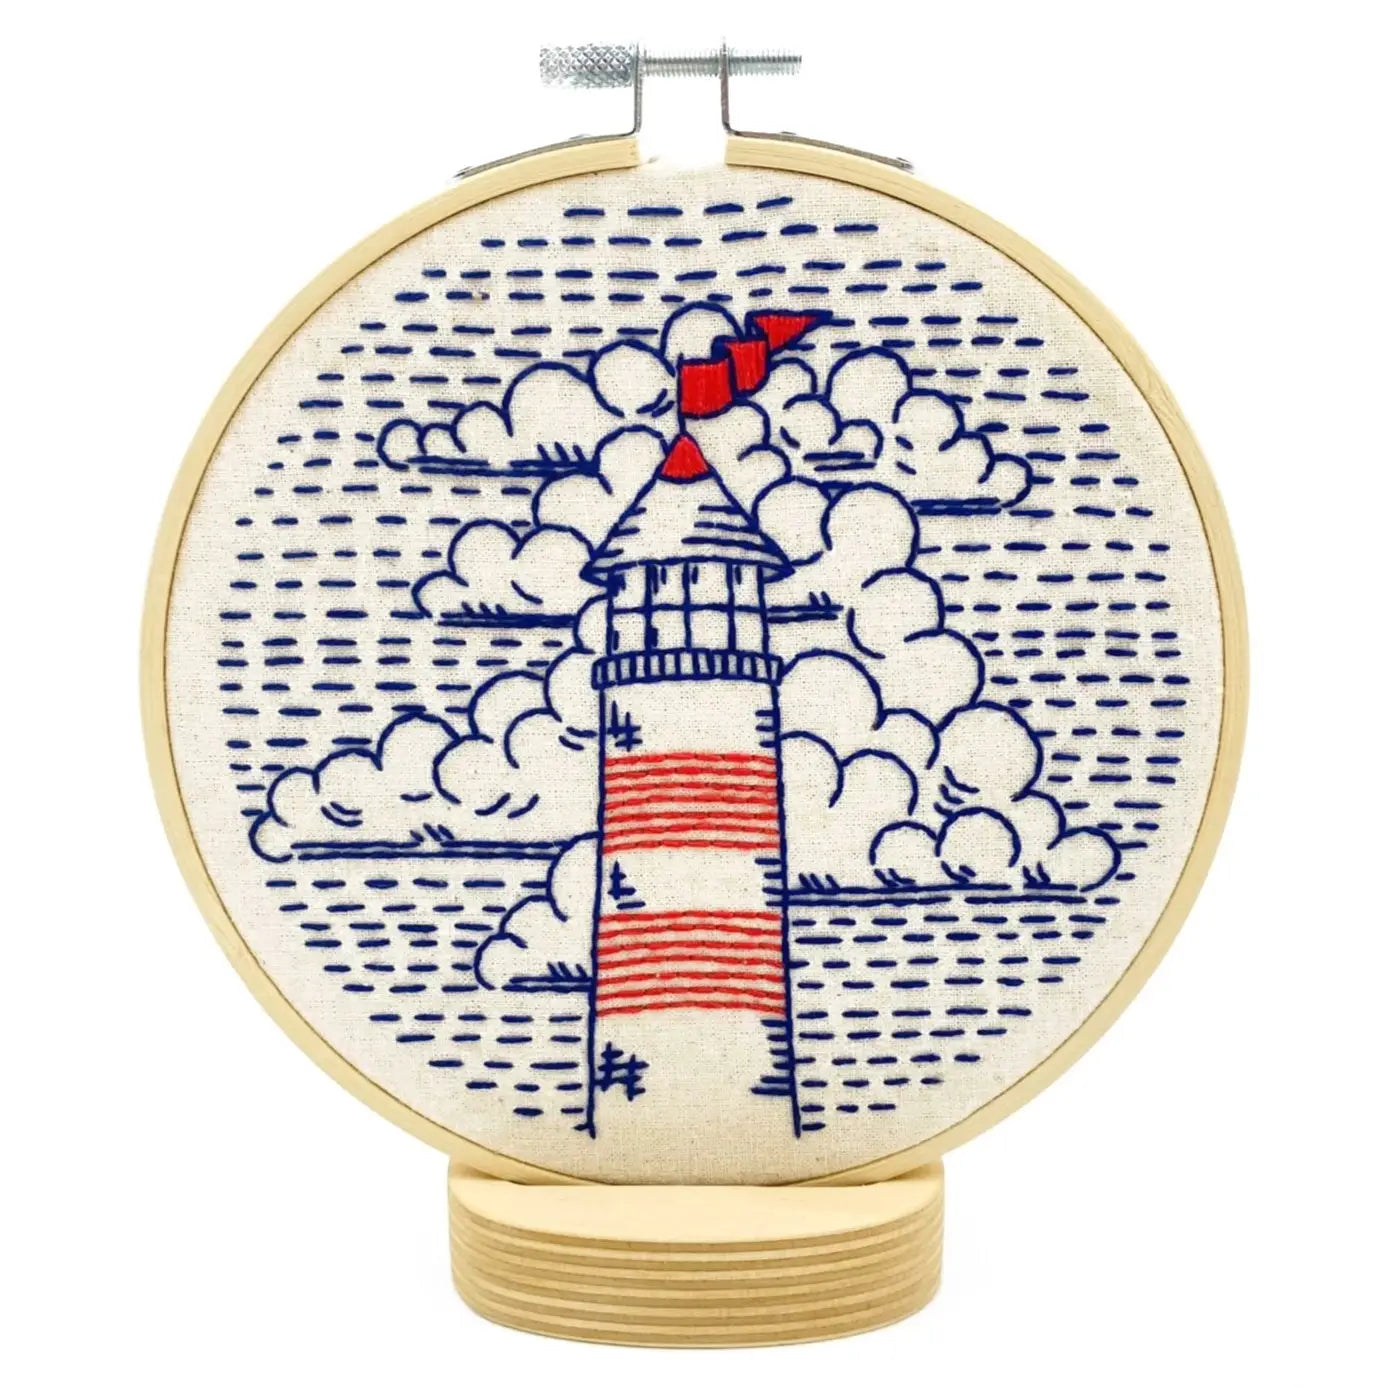 Hook, Line & Tinker Embroidery Kit - Lighthouse